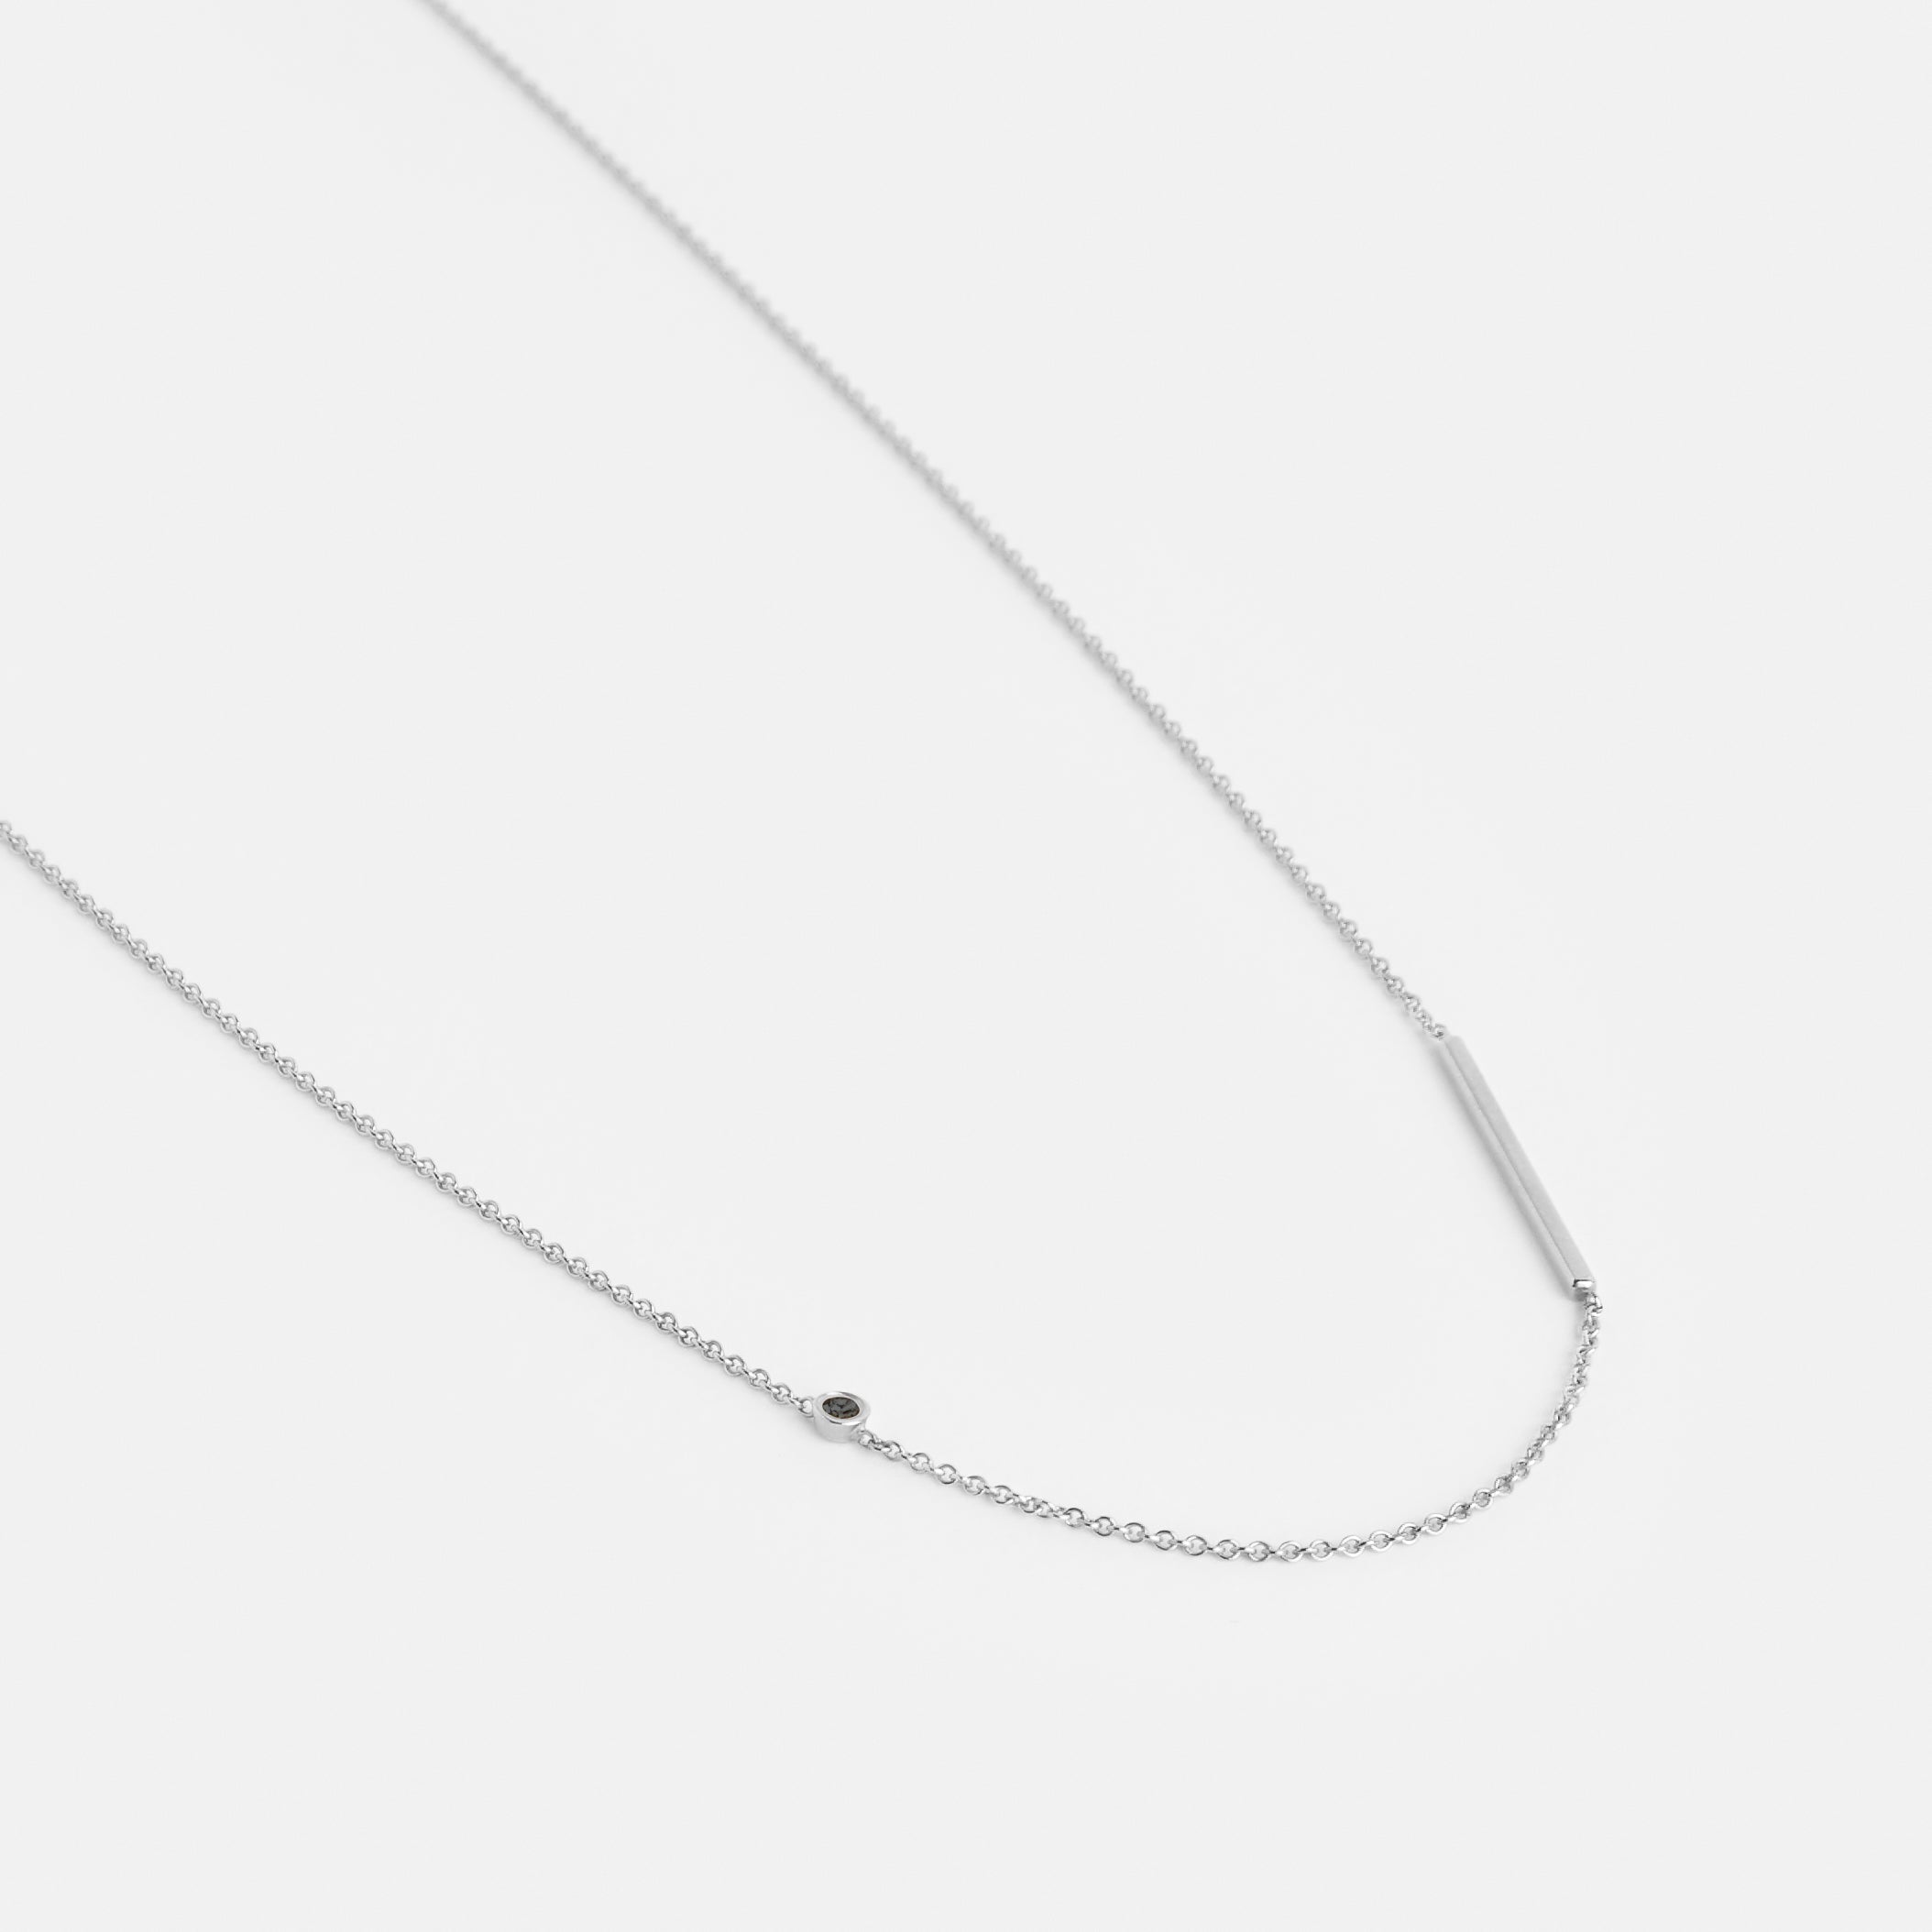 Iki Alternative Necklace in 14k White Gold set with Black Diamond By SHW Fine Jewelry NYC